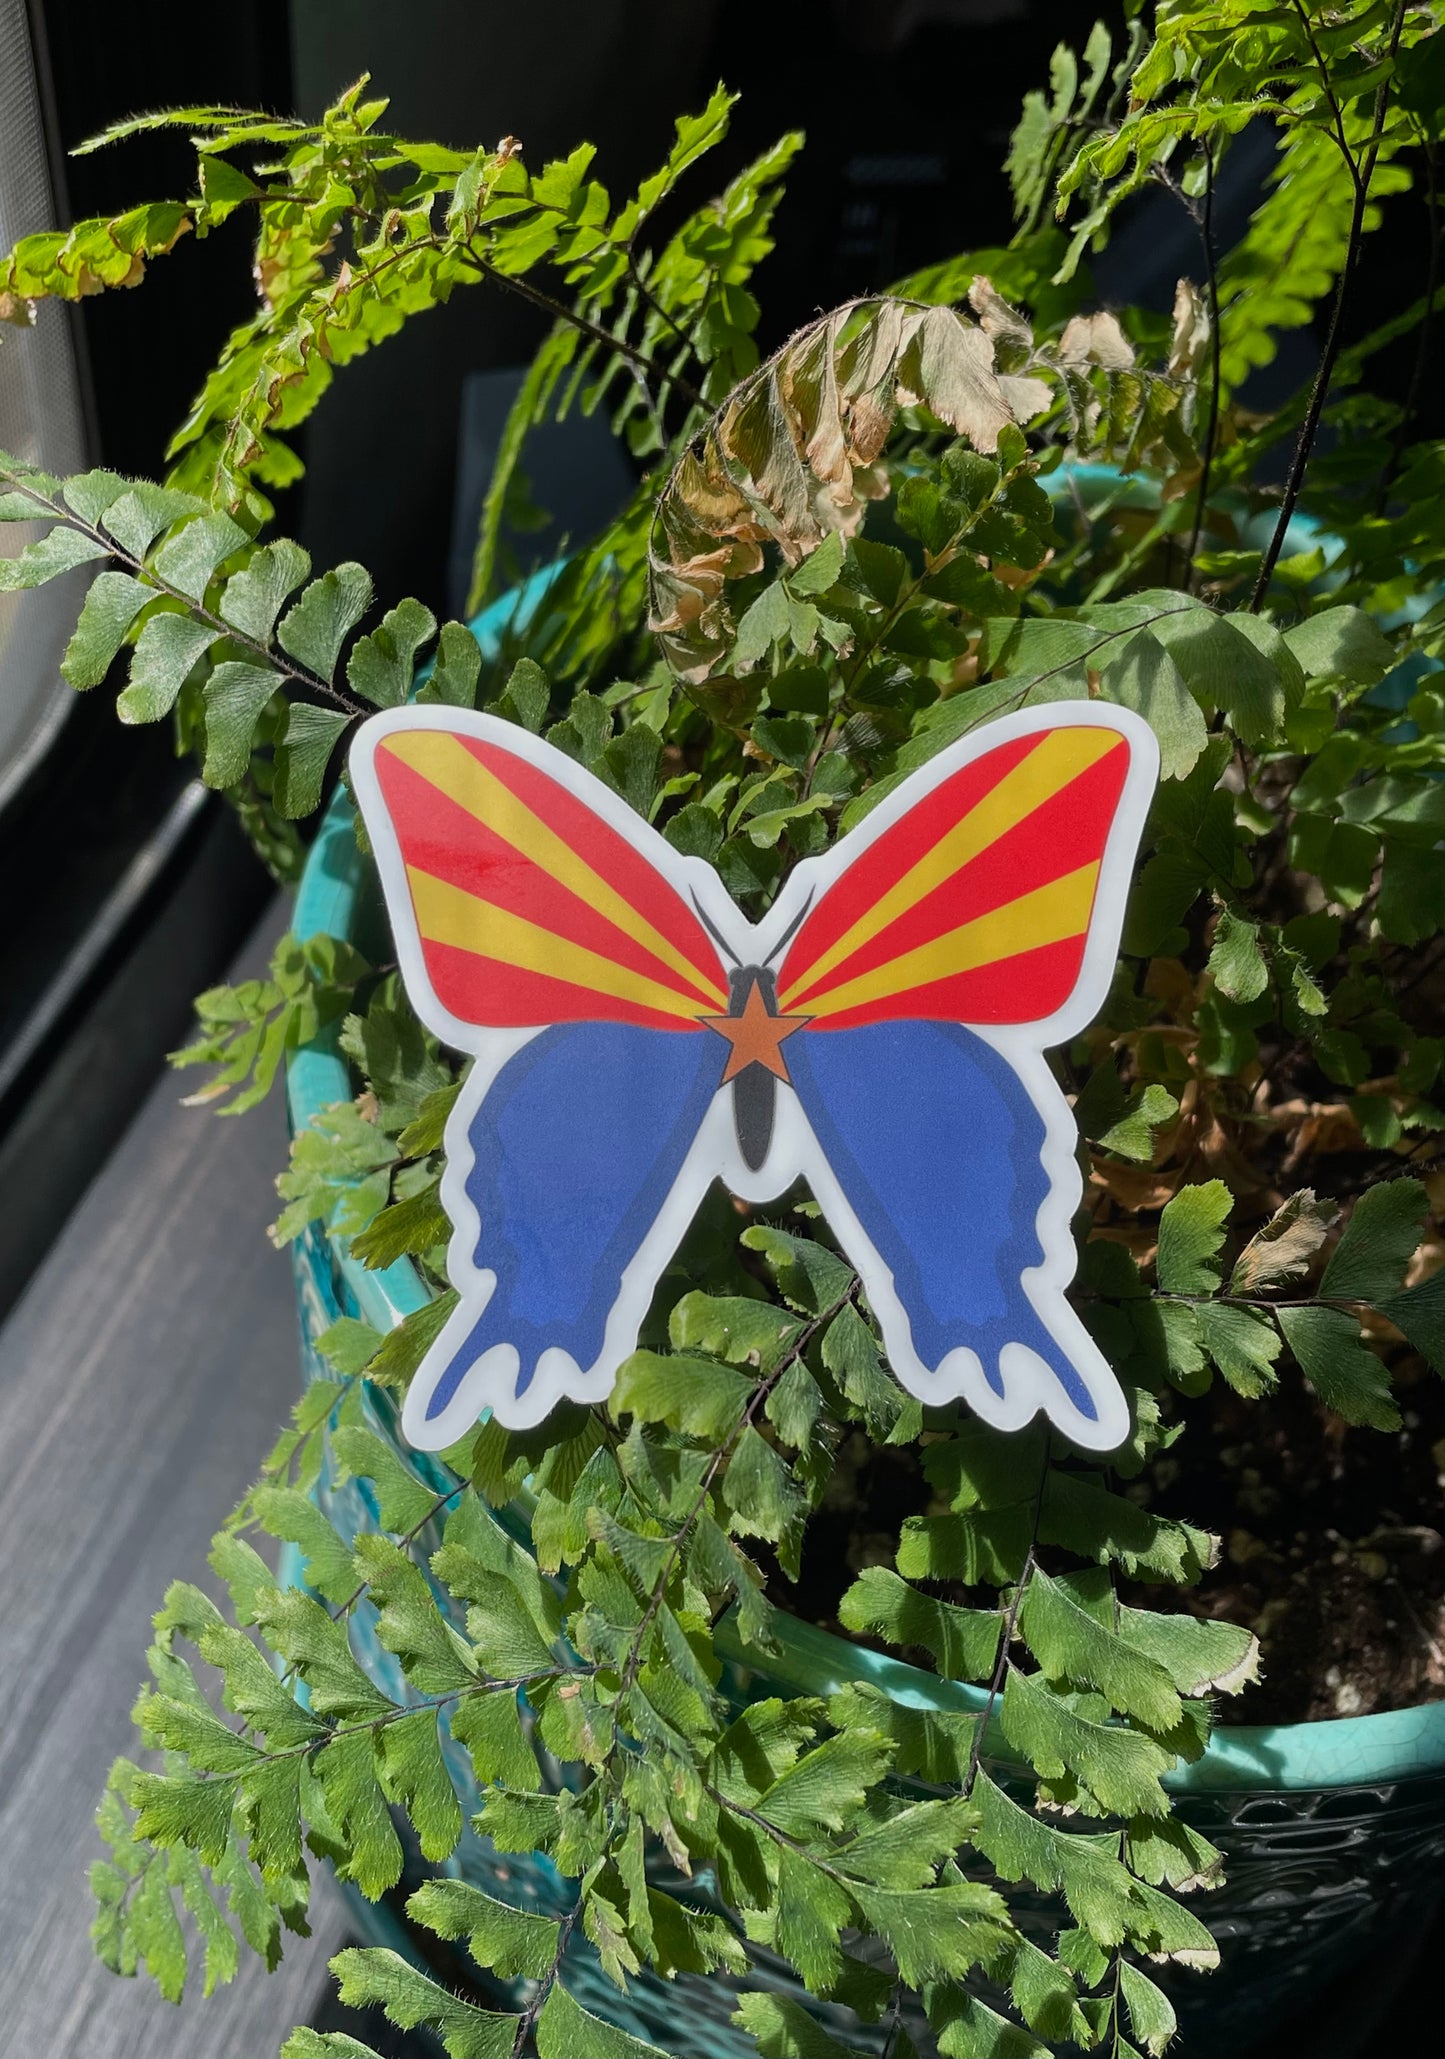 Arizona State Flag Butterfly Vinyl Sticker